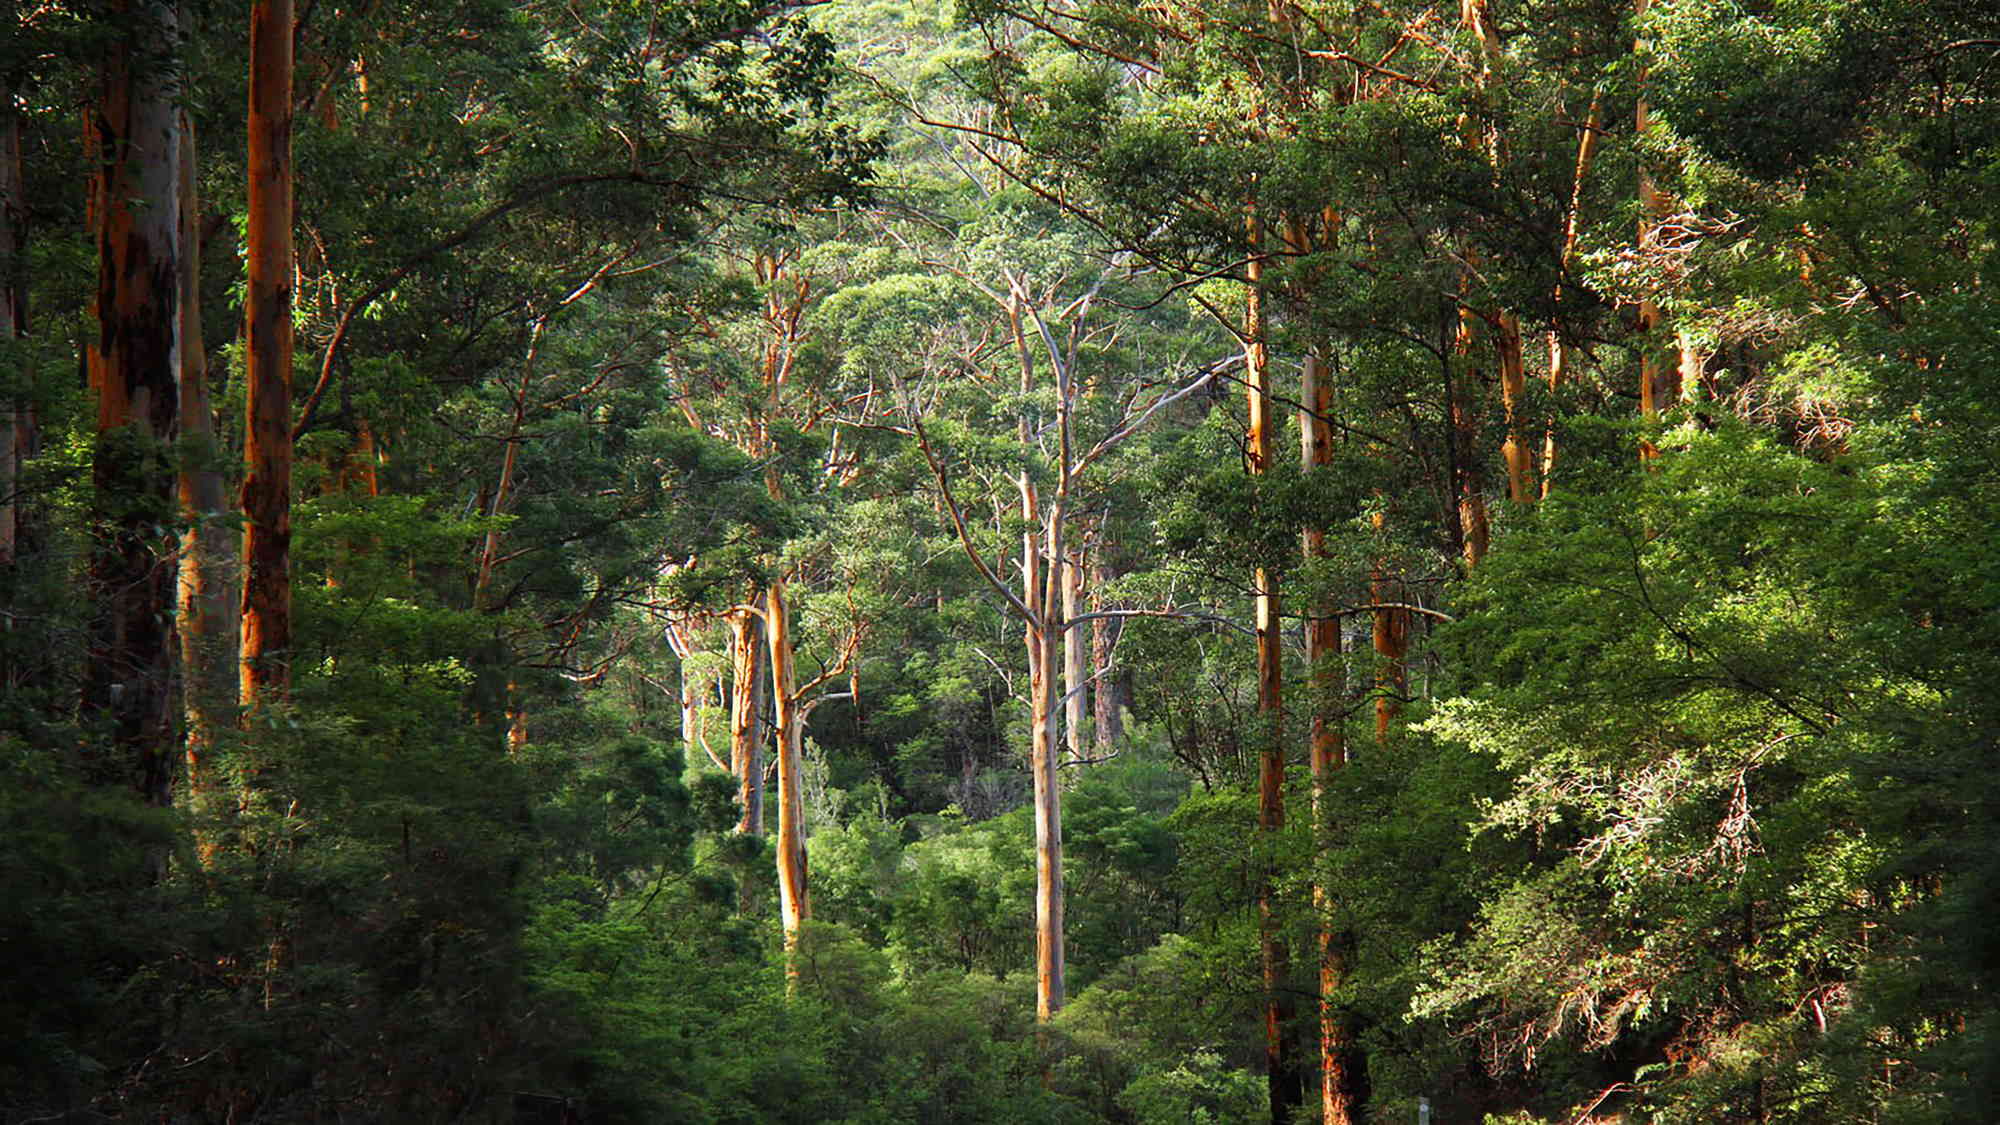 Channybearup forest near Manjimup